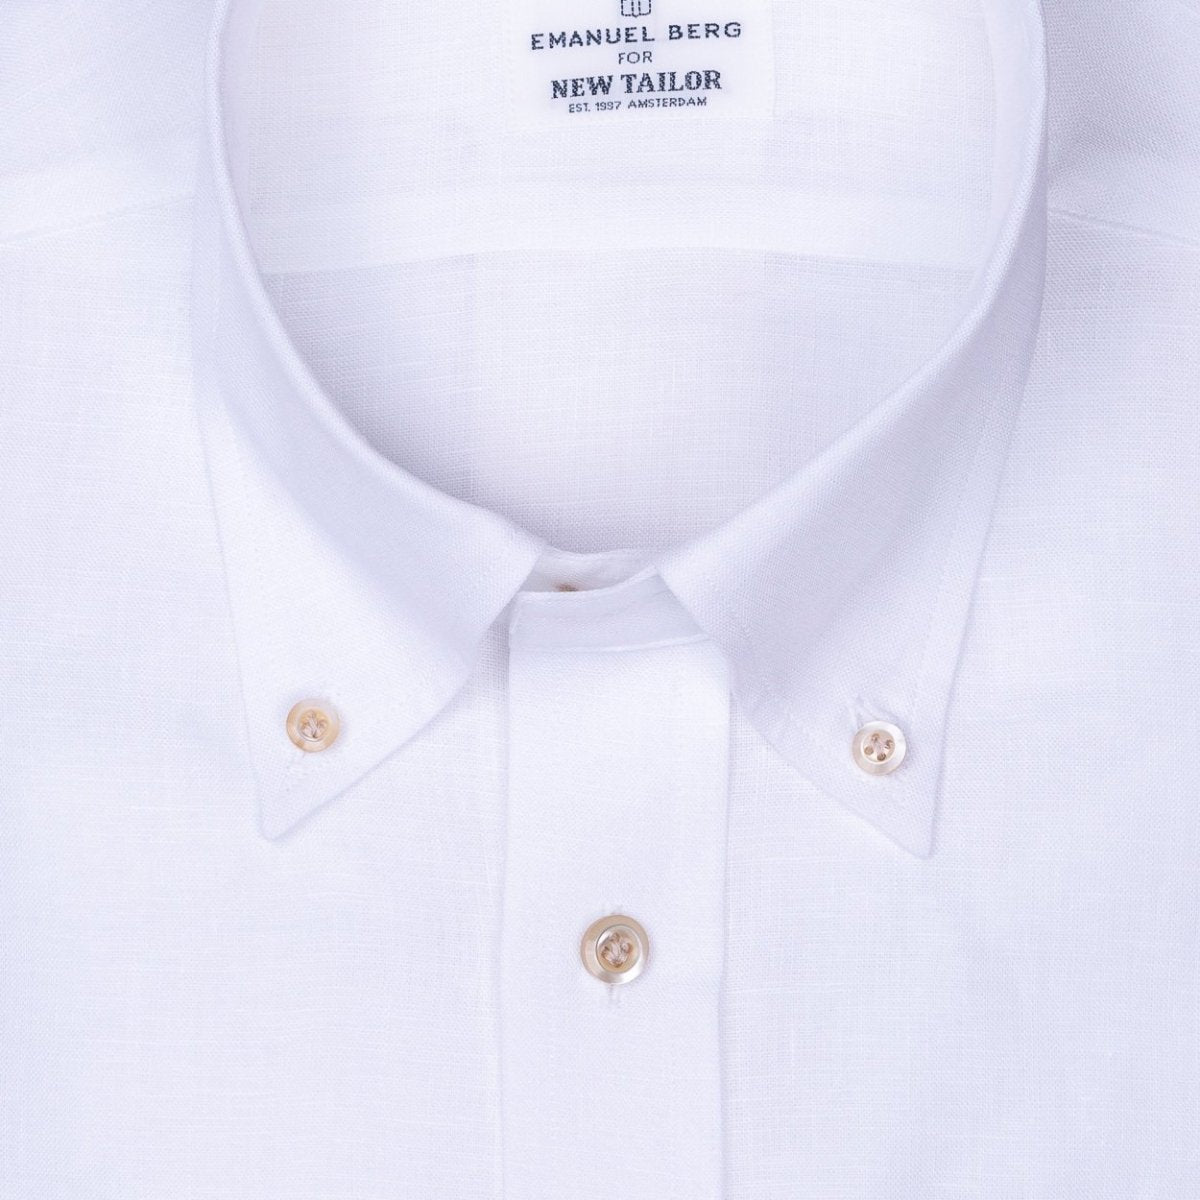 Emanuel Berg - Maatshirt, White Plain Linnen (Smart Casual), Shirt | NEW TAILOR Webshop